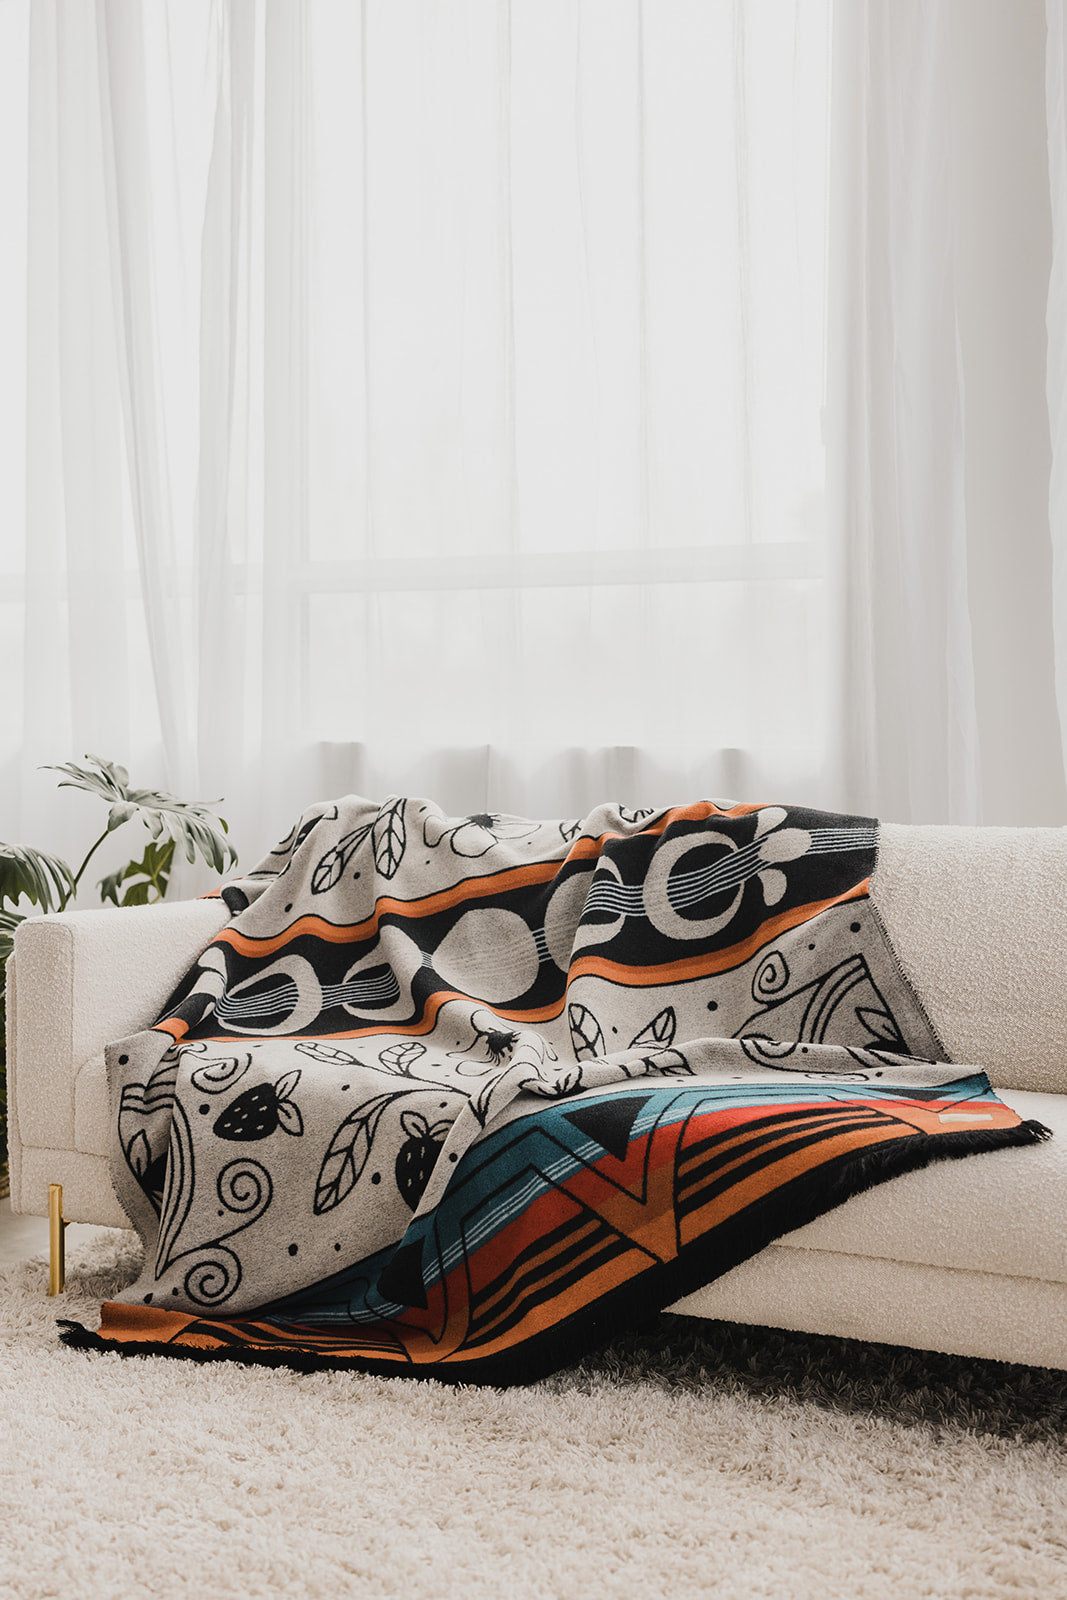 Custom Woven Blankets in Australia